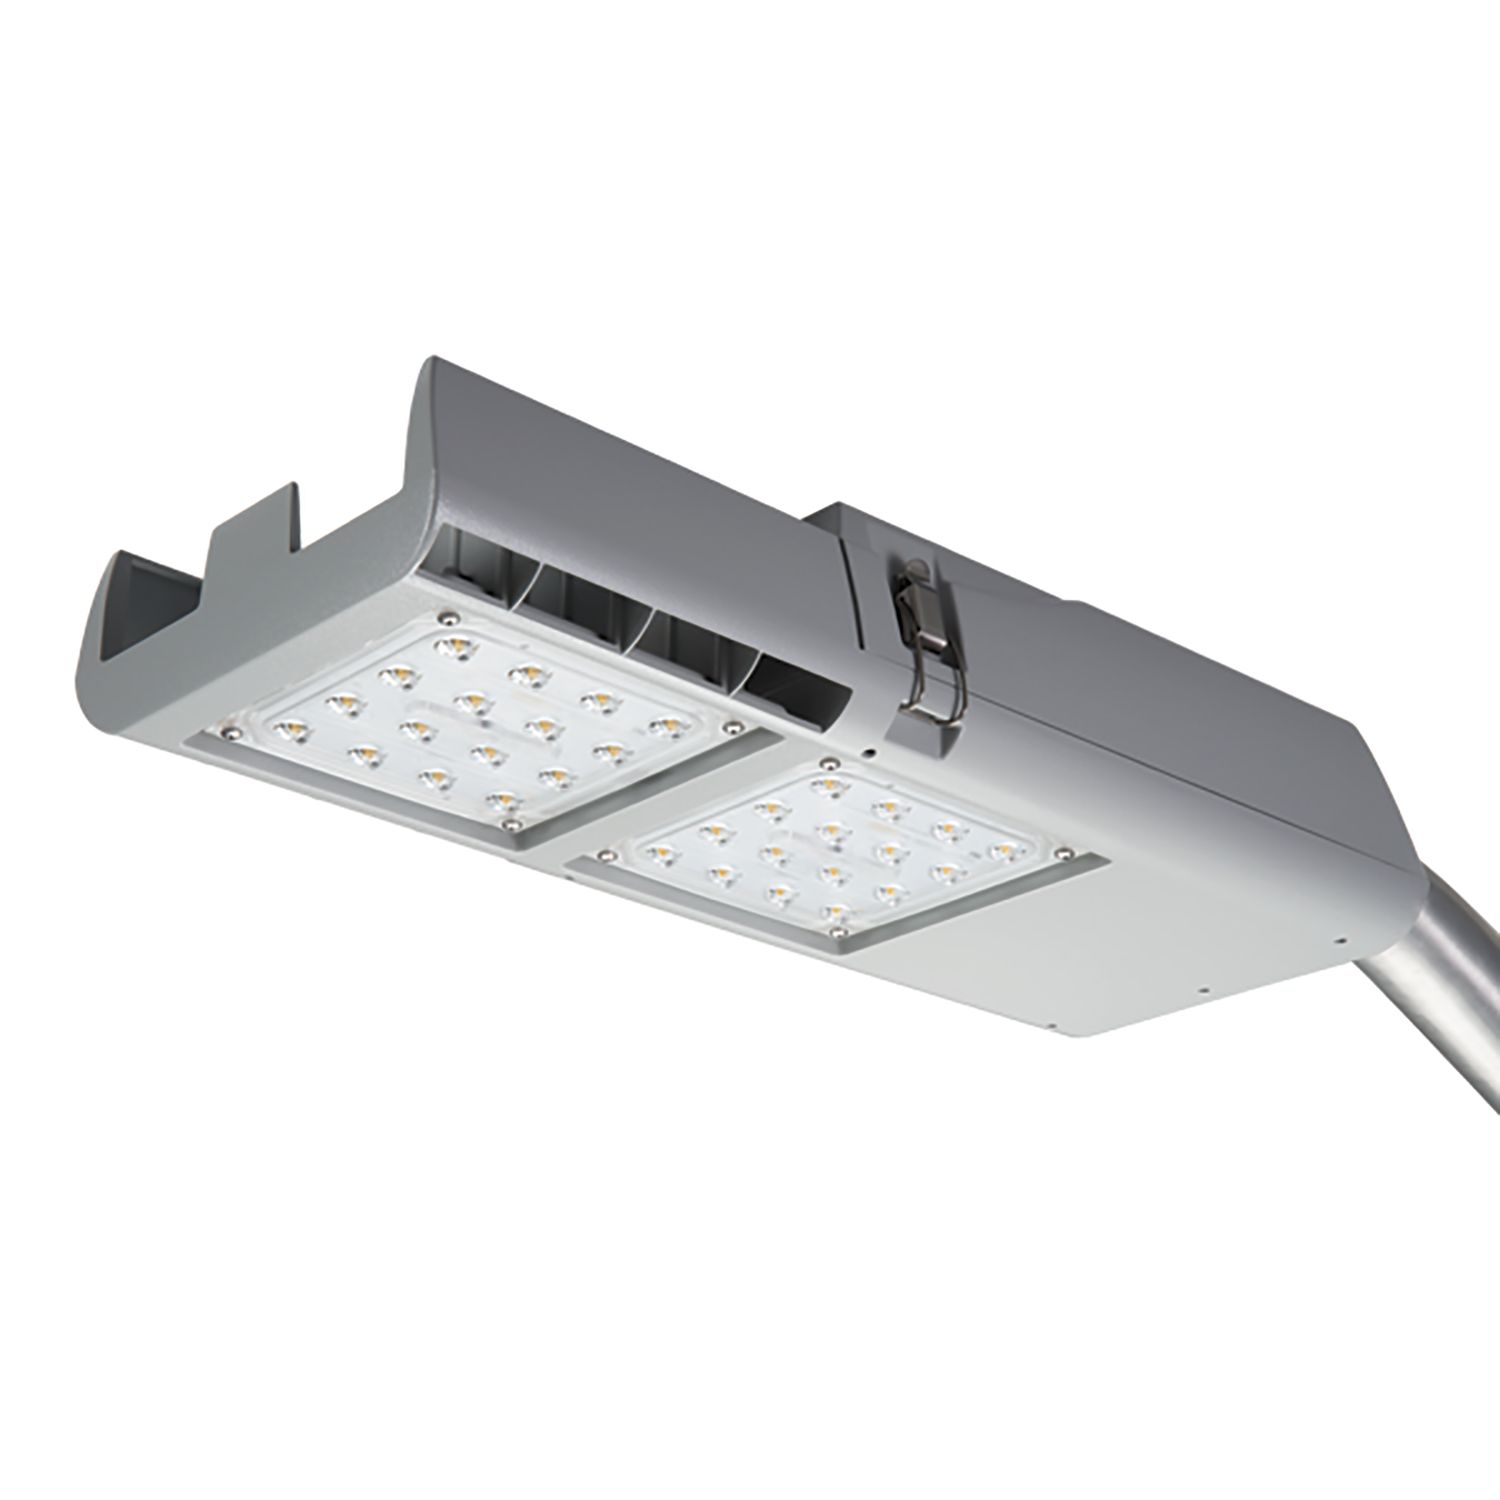 XNV2 LED | Cooper Lighting Solutions | Cooper Lighting Solutions